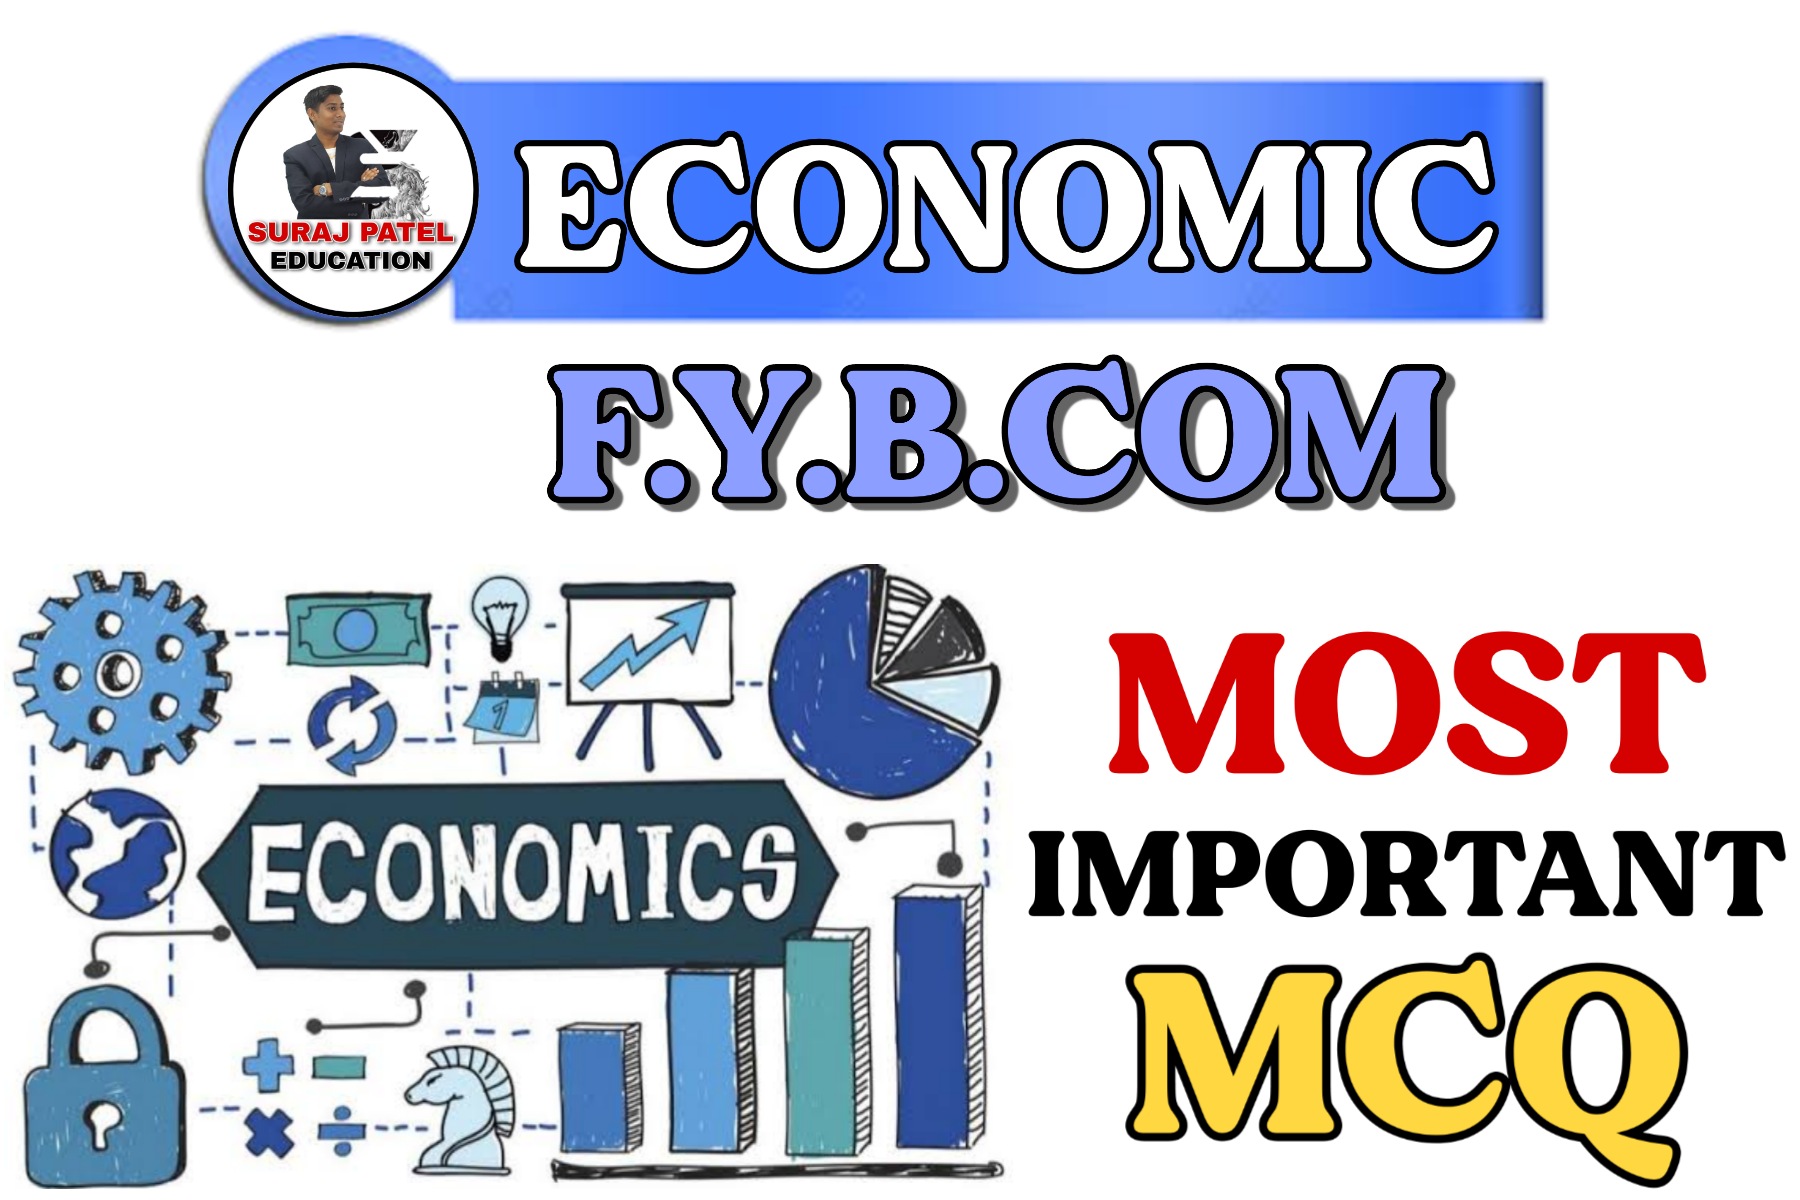 F.Y.B.Com Business Economics MCQ PDF